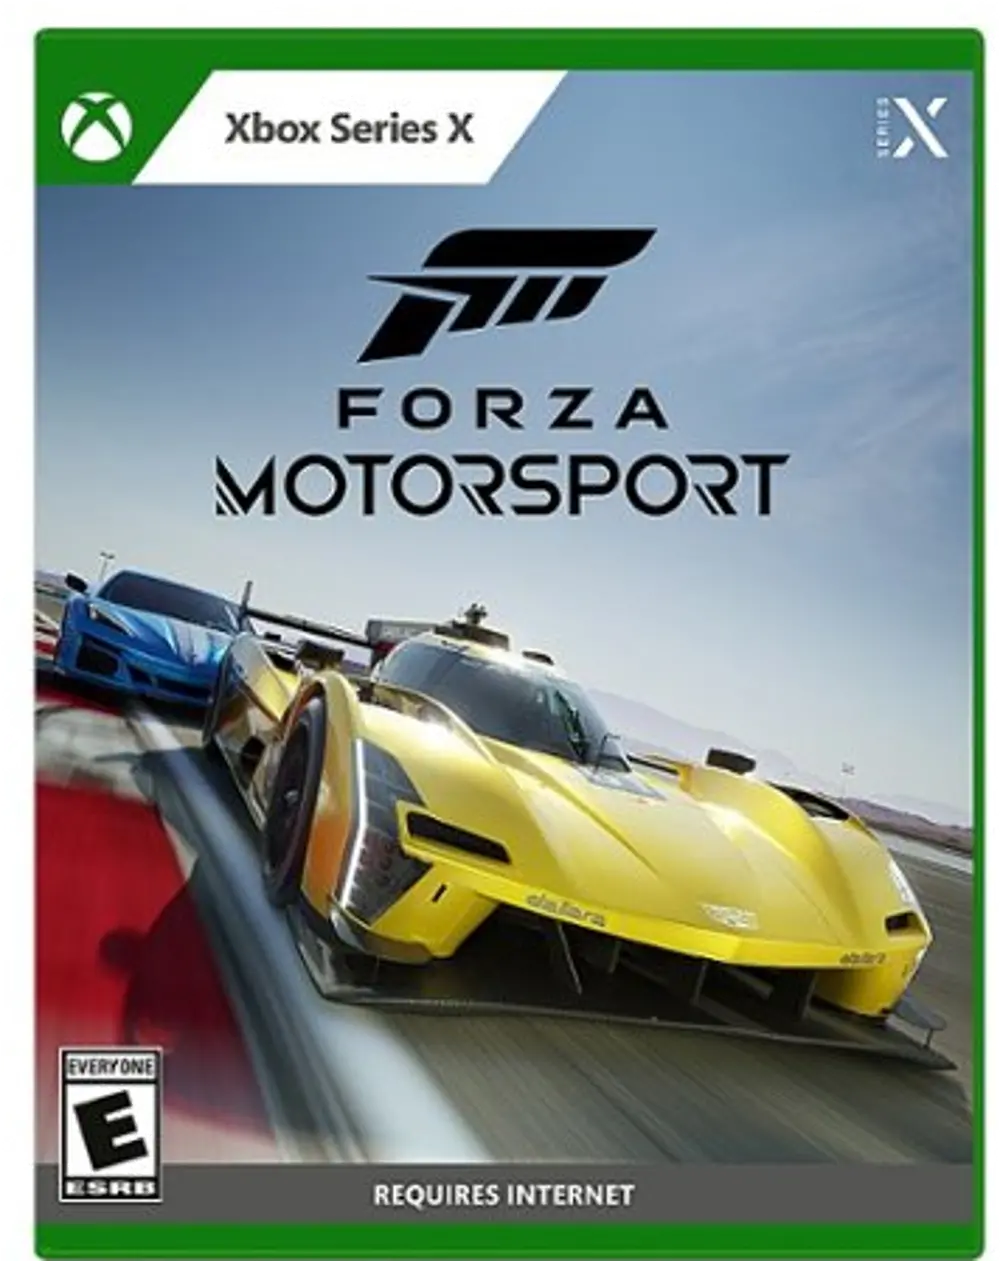 VBH-00001 Forza Motorsport Standard Edition - Xbox Series X-1